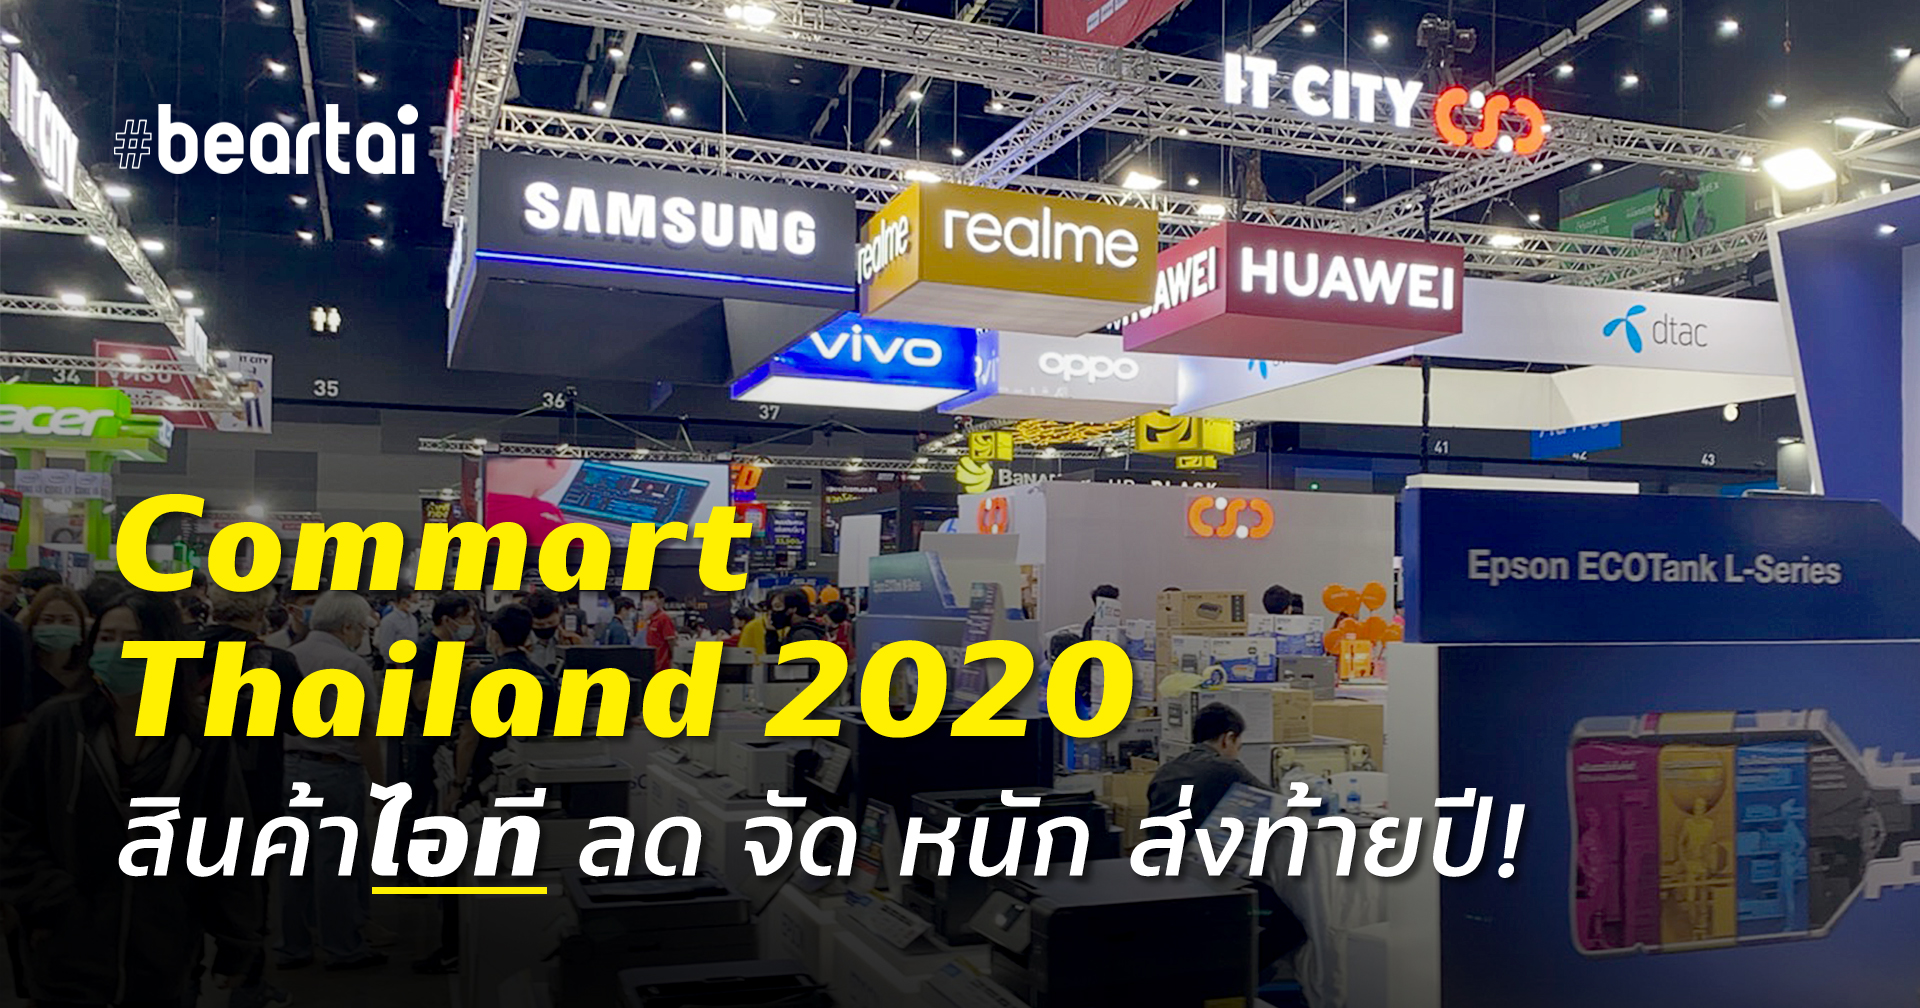 Commart thailand 2020 ลดกระหน่ำสินค้าไอที !